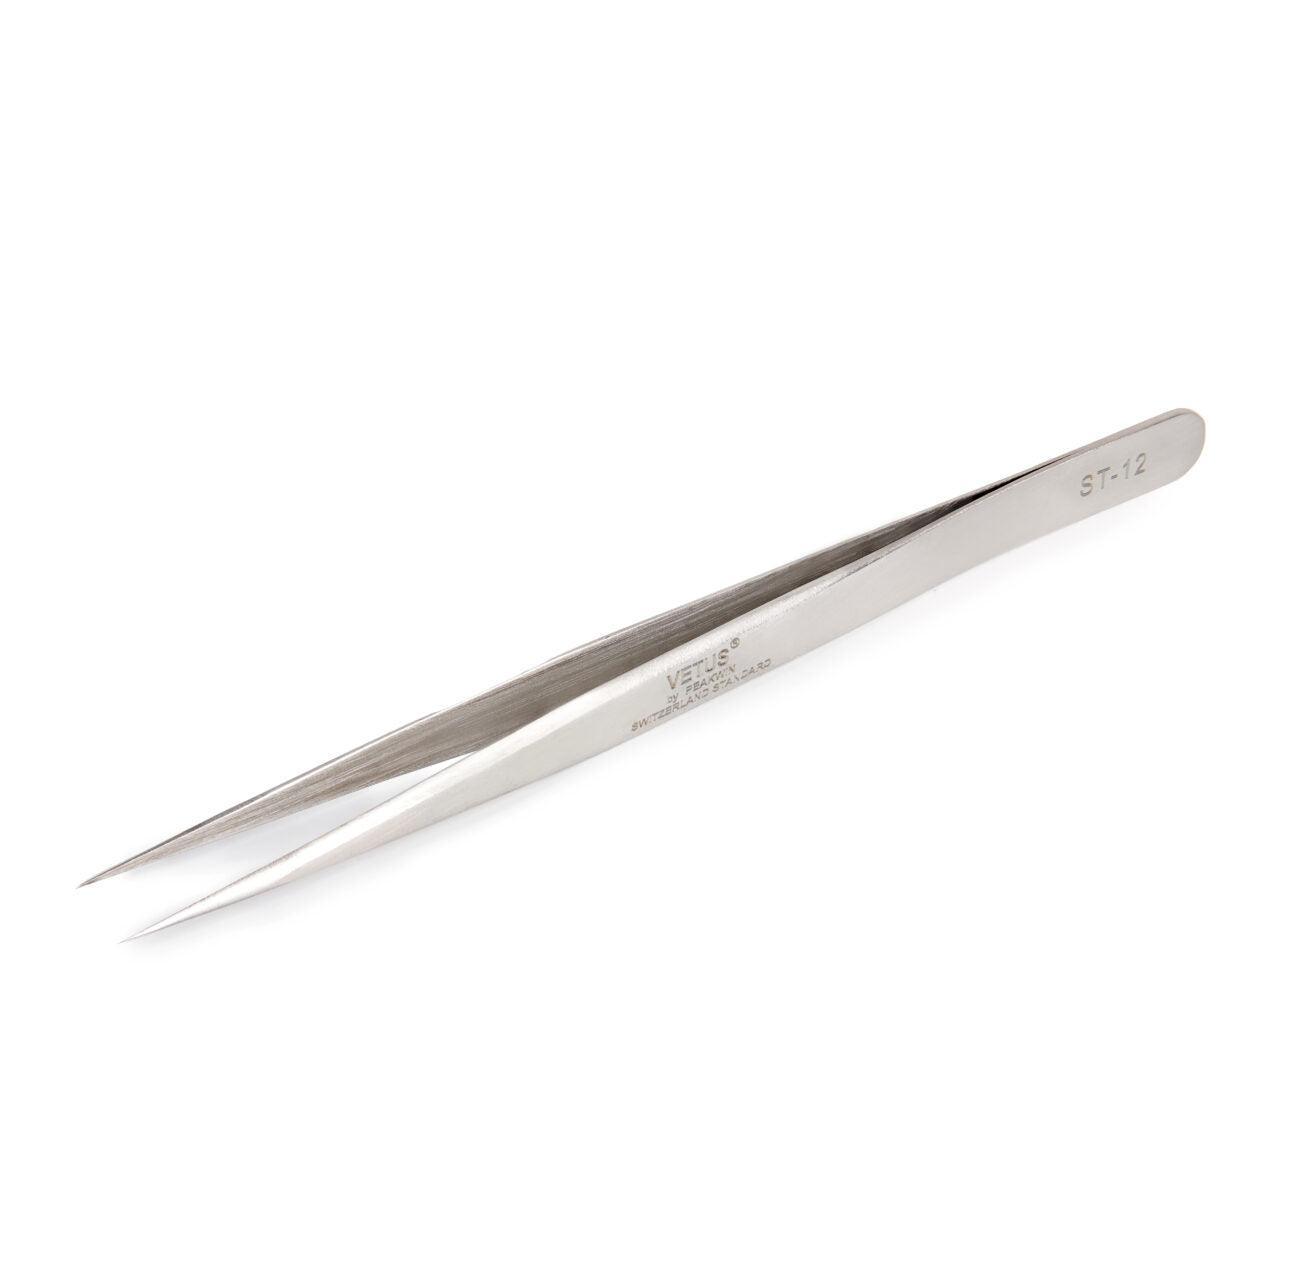 Vetus ST-12 Extra Long Straight Tweezers-Giali Lashes